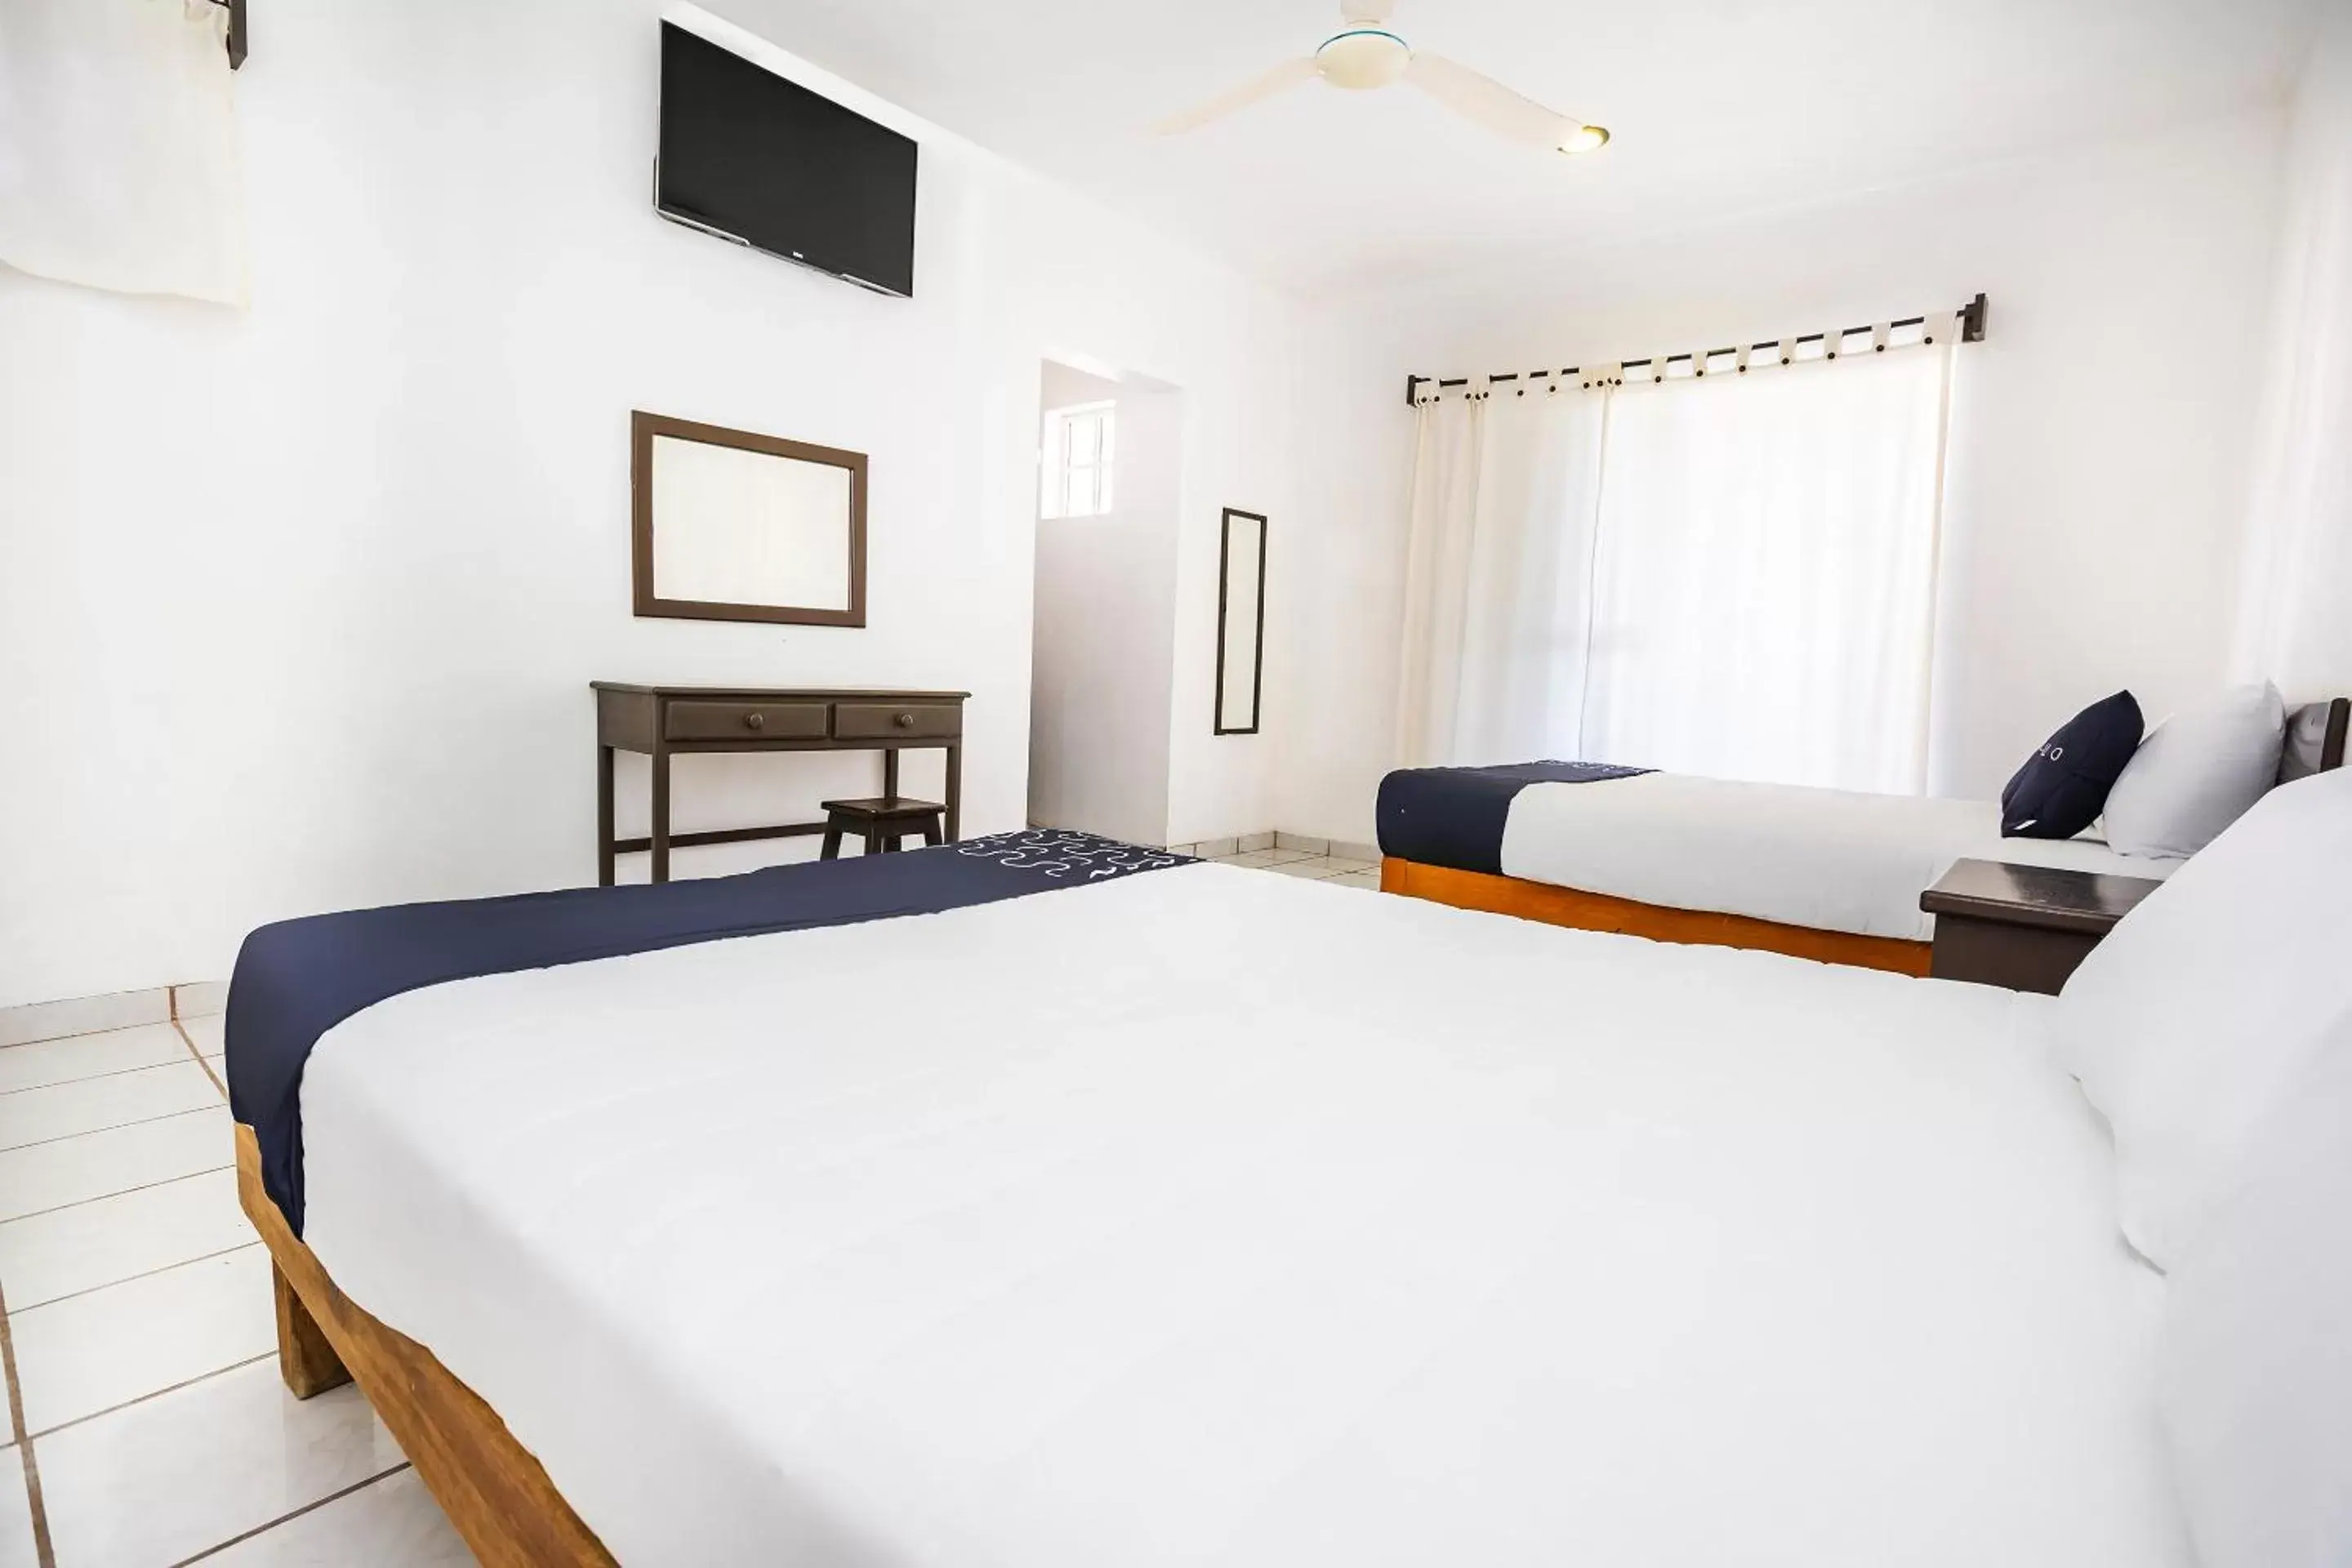 Bedroom, Bed in Capital O Oxtankah,chetumal bay